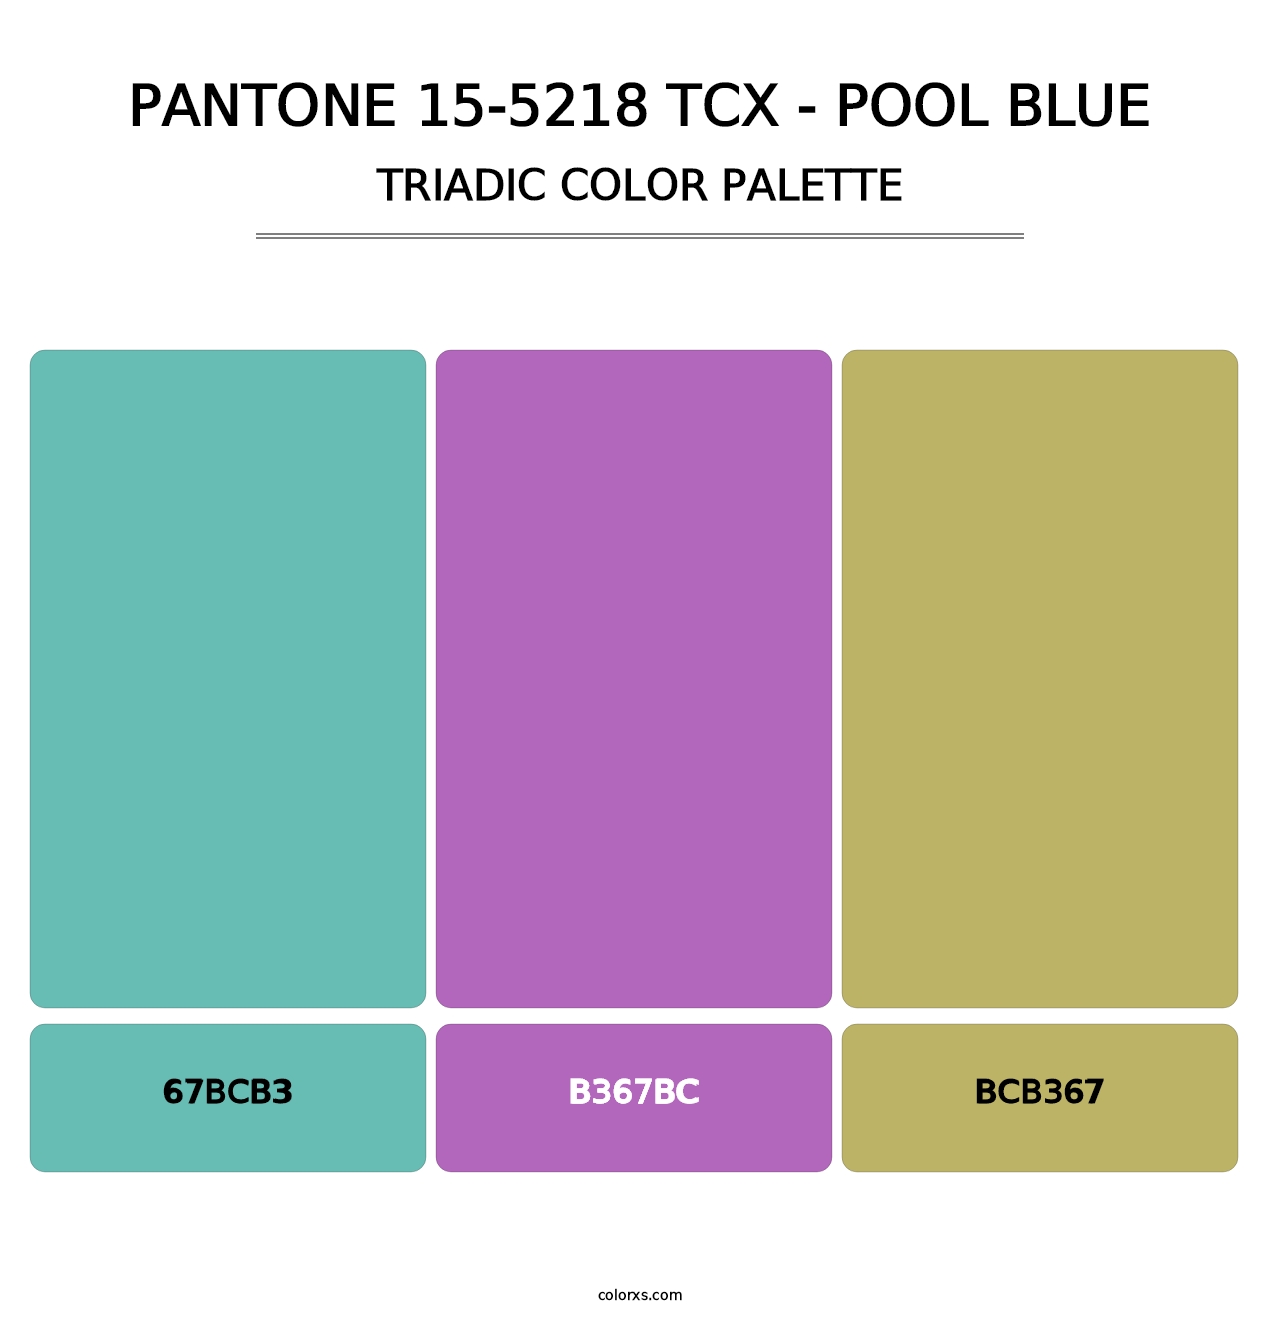 PANTONE 15-5218 TCX - Pool Blue - Triadic Color Palette